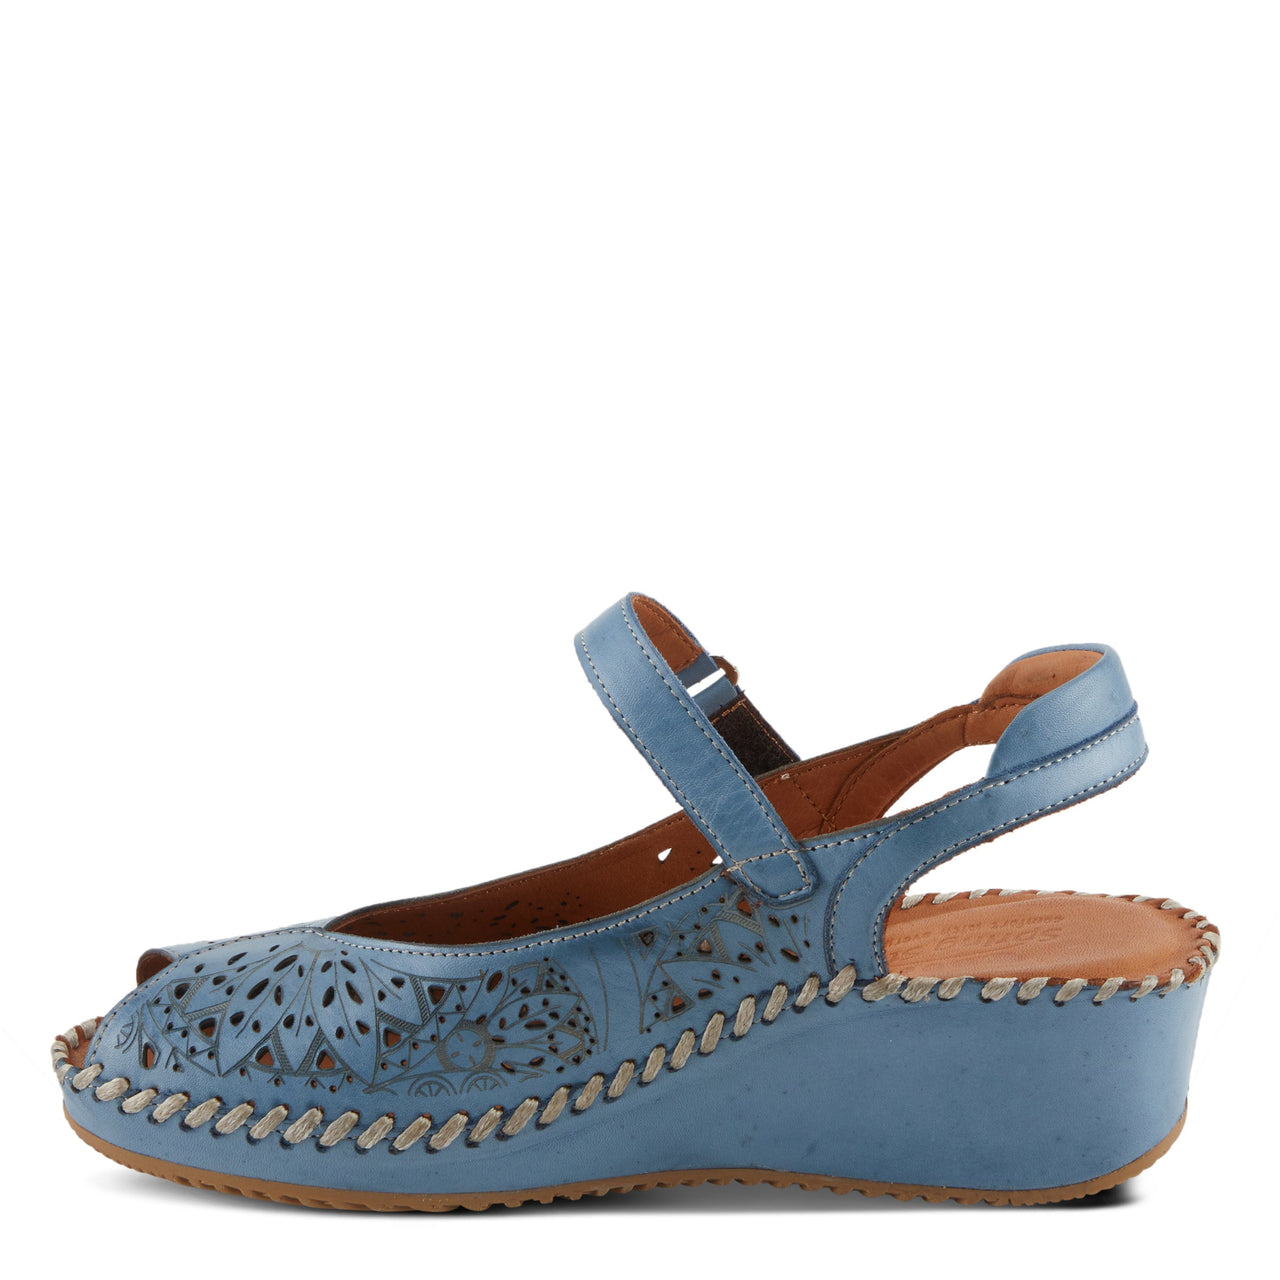 Trendy and versatile Spring Step Santonio Sandals for everyday wear